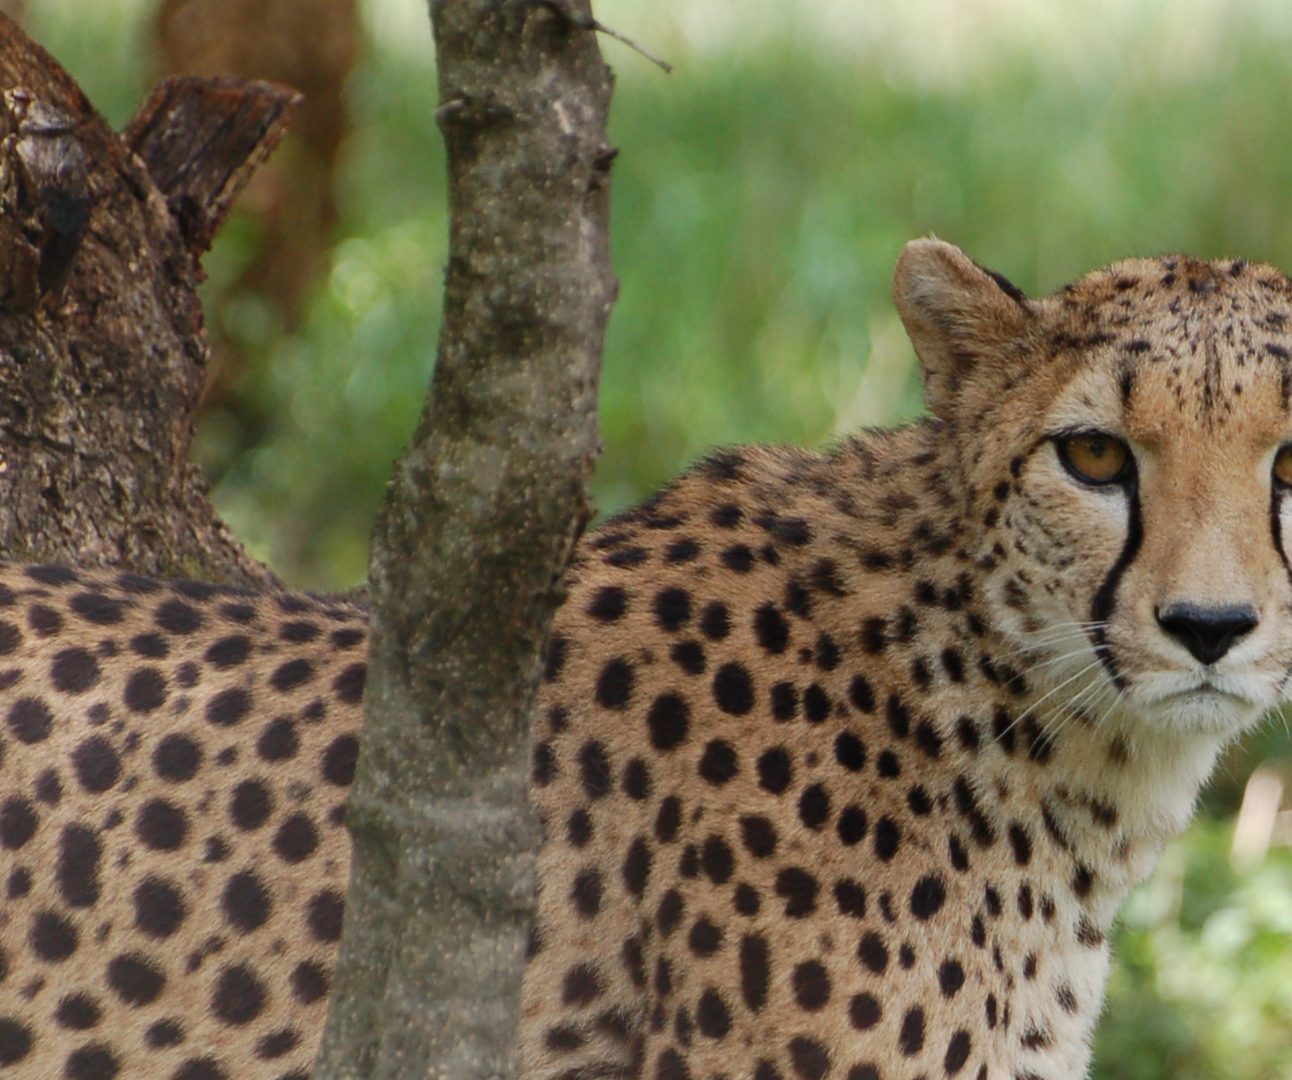 A photo of an adult cheetah peeking through the undergrowth